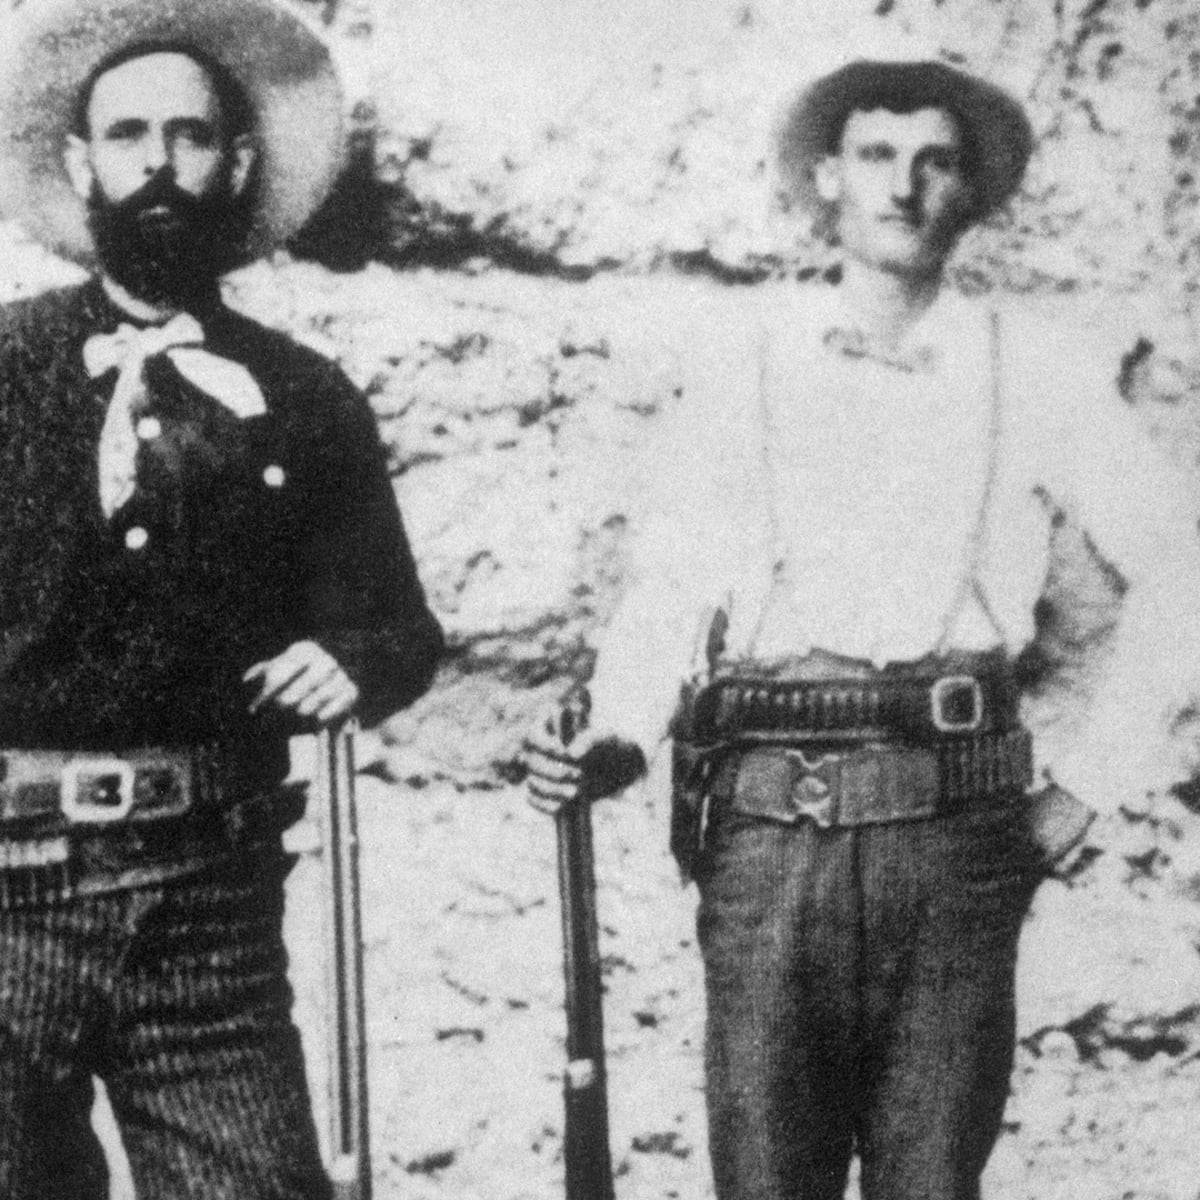 Early 20th century American man wearing suspenders